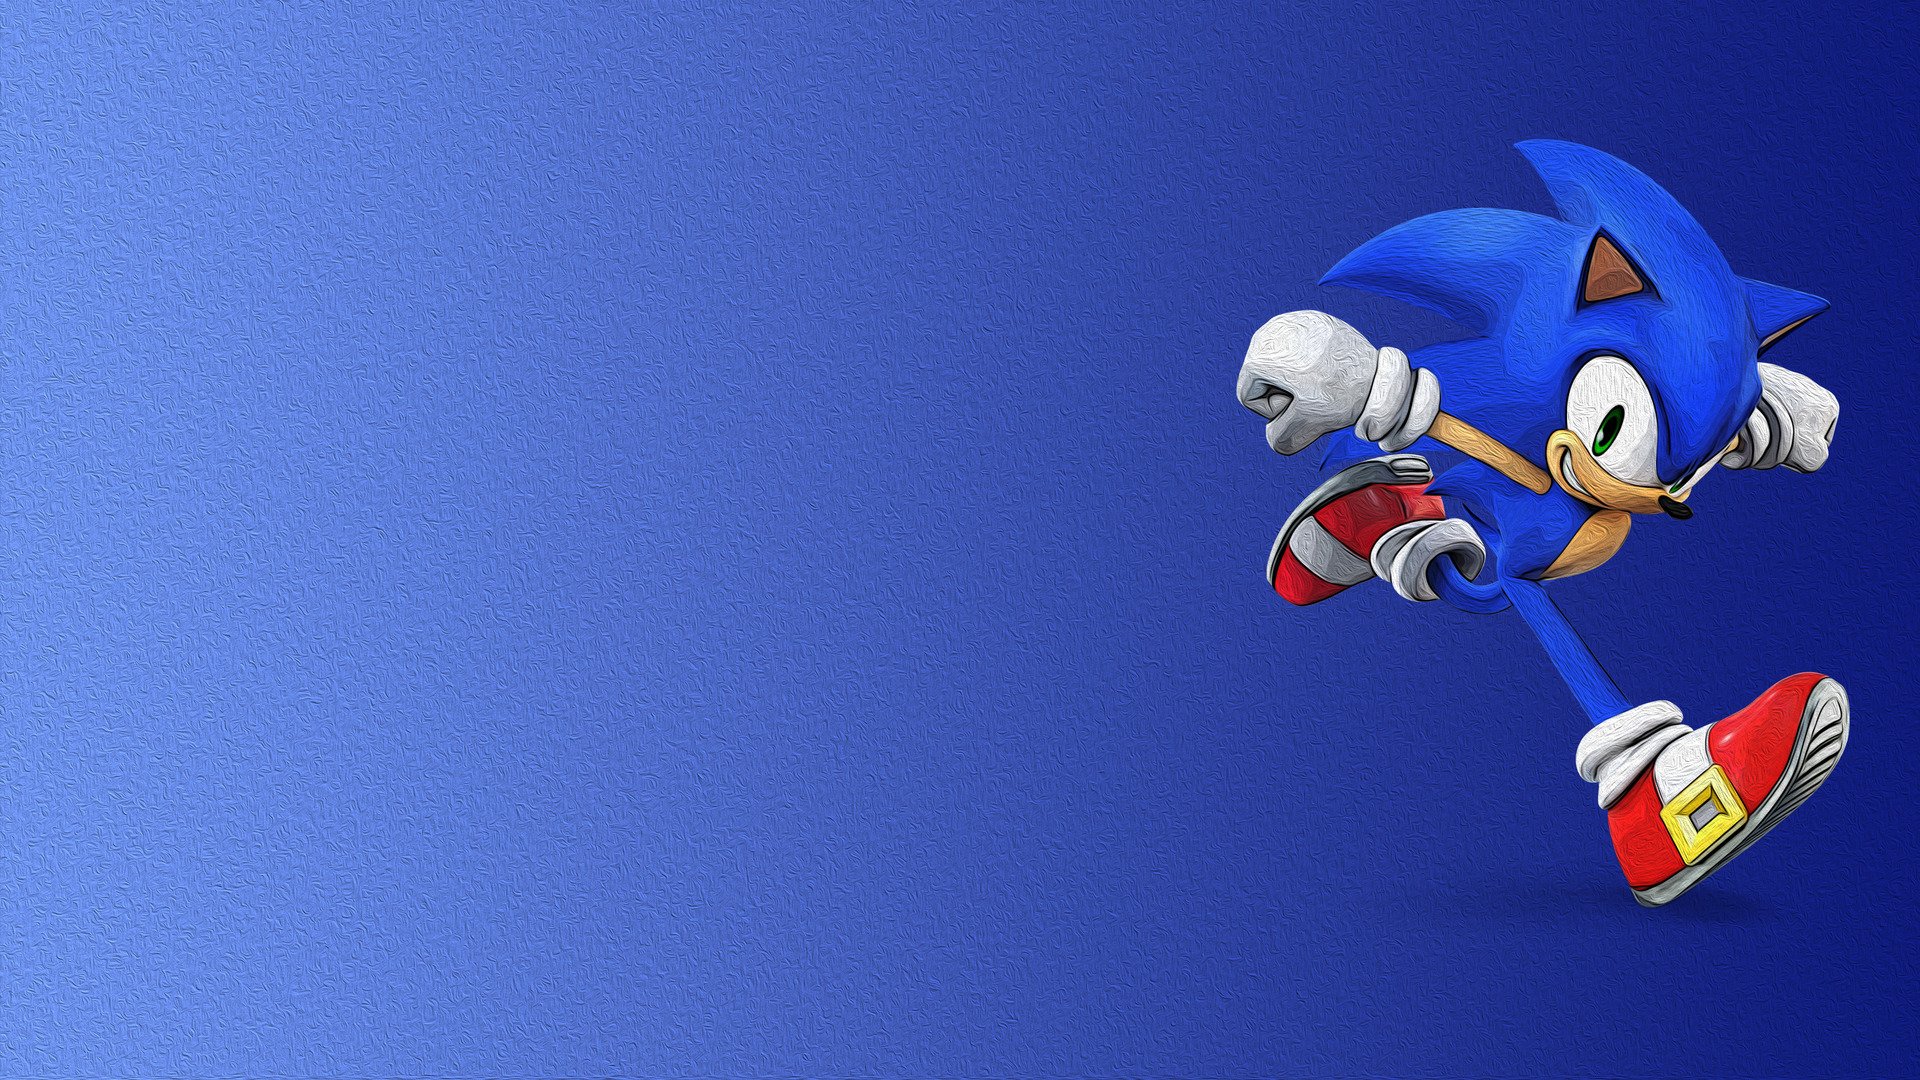 Sonic the Hedgehog wallpaper 27008